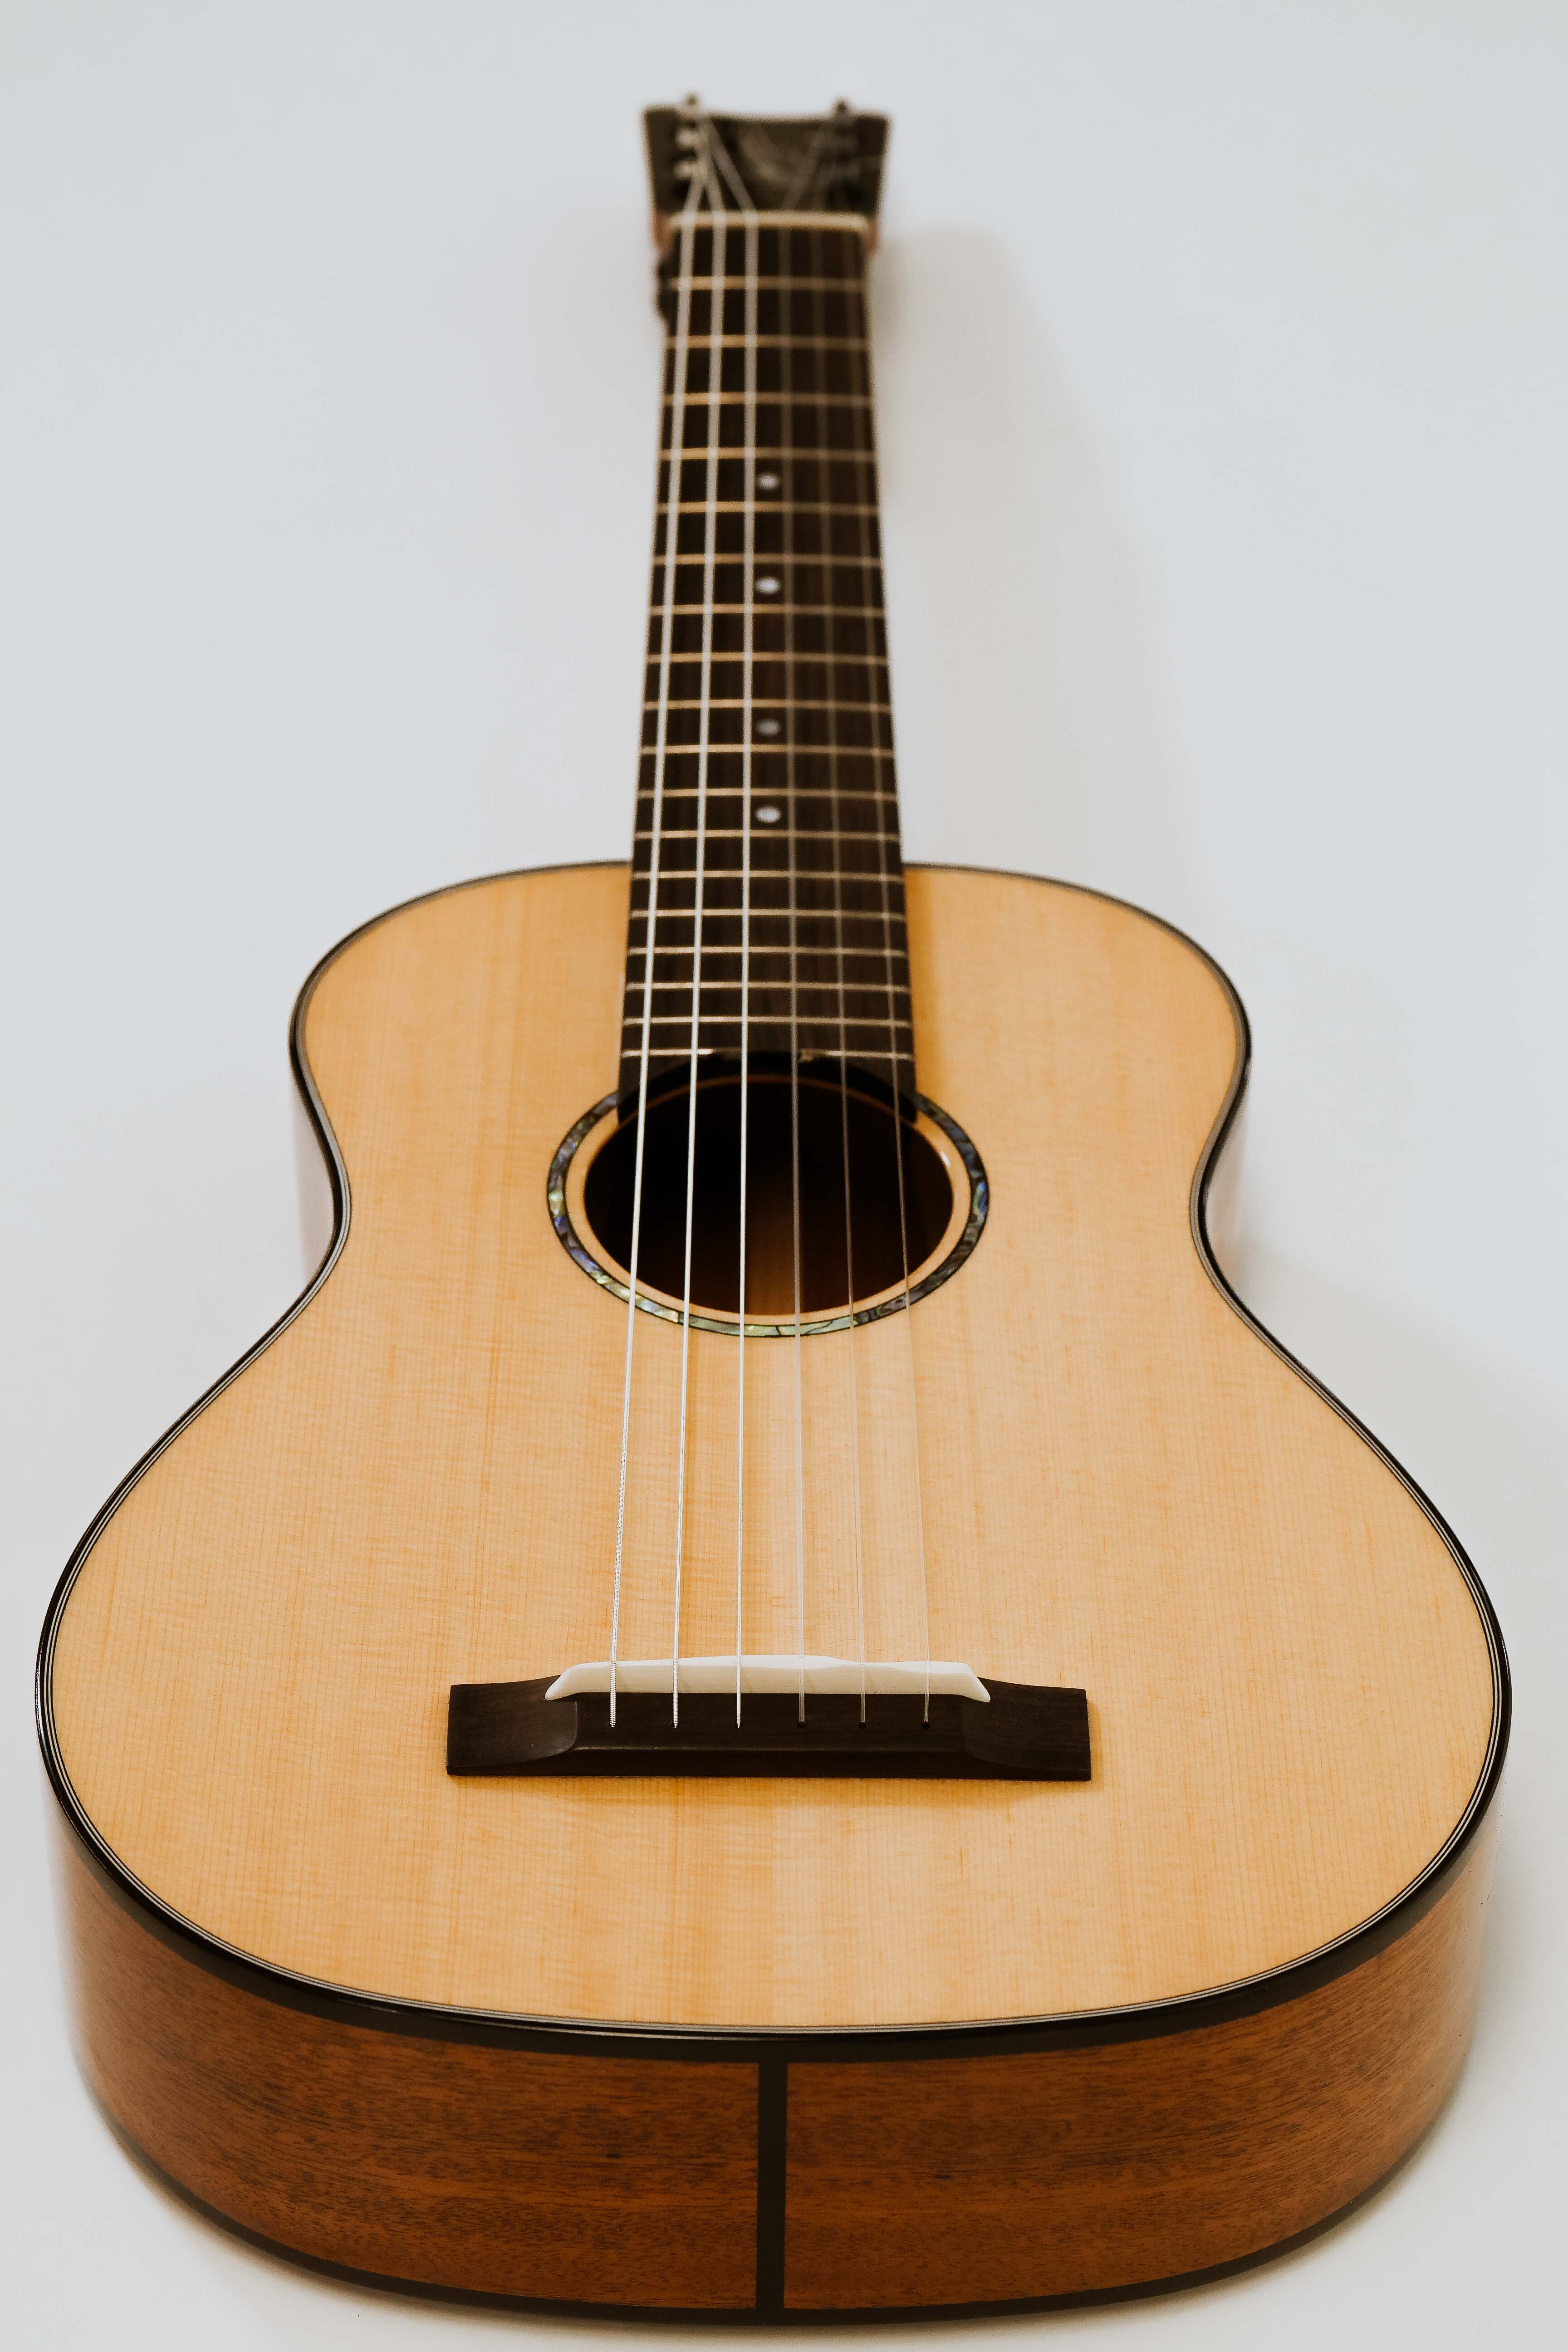 Romero Creations RC-B6-SM 6 String Baritone Guitar/Guilele Spruce/Mahogany Nylon String "KALIU" E to E Tuning